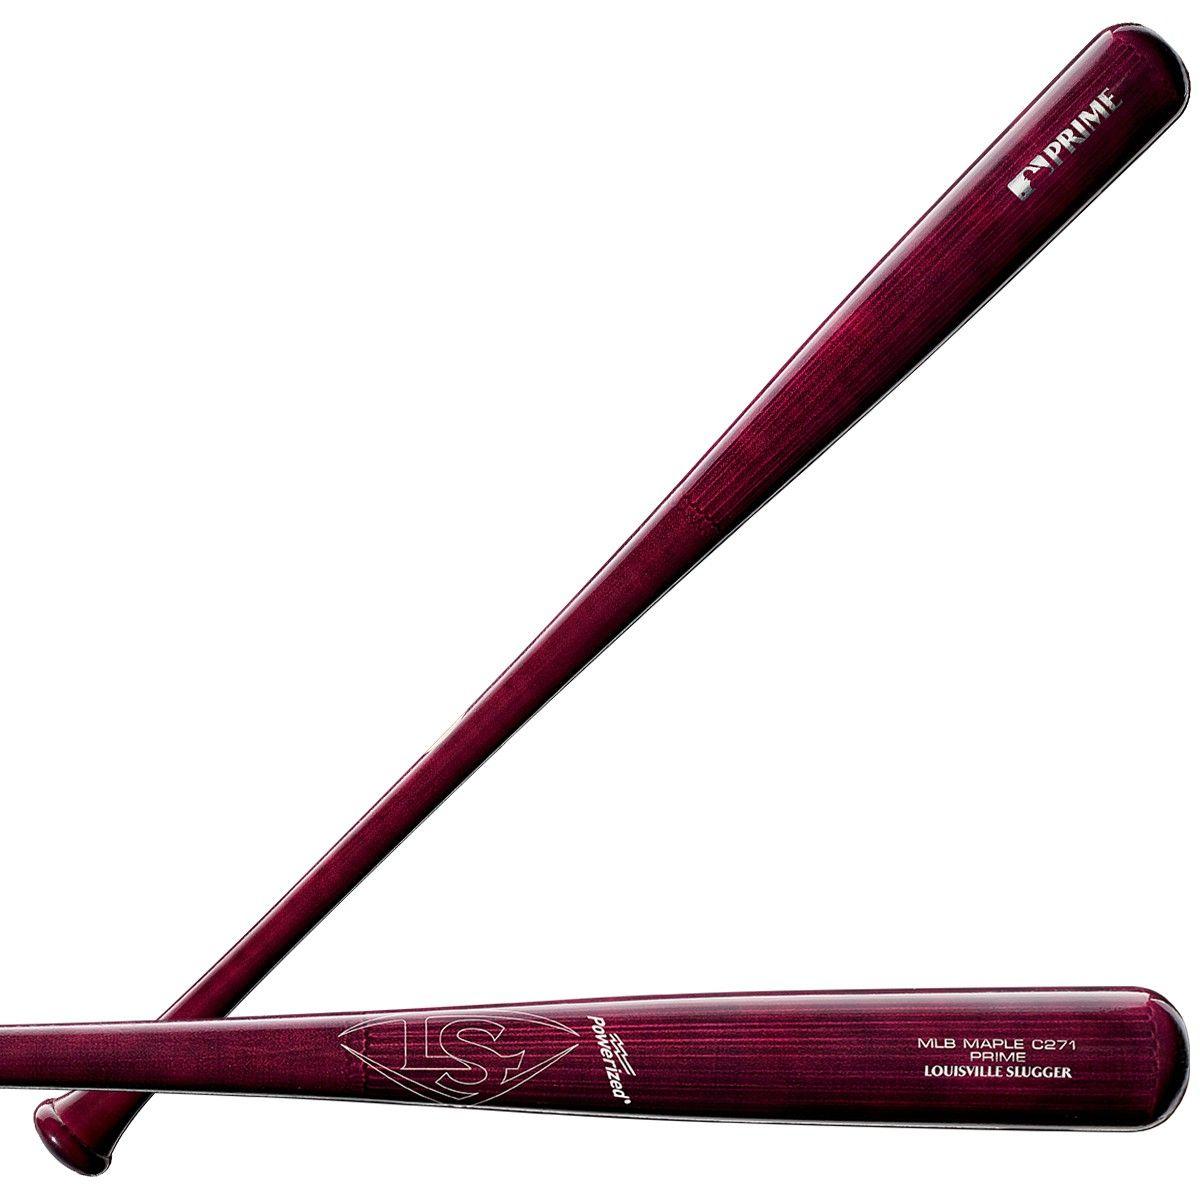 Louisville Slugger Bat Logo - Shop Louisville Slugger® Baseball Bats, Gloves and Equipment